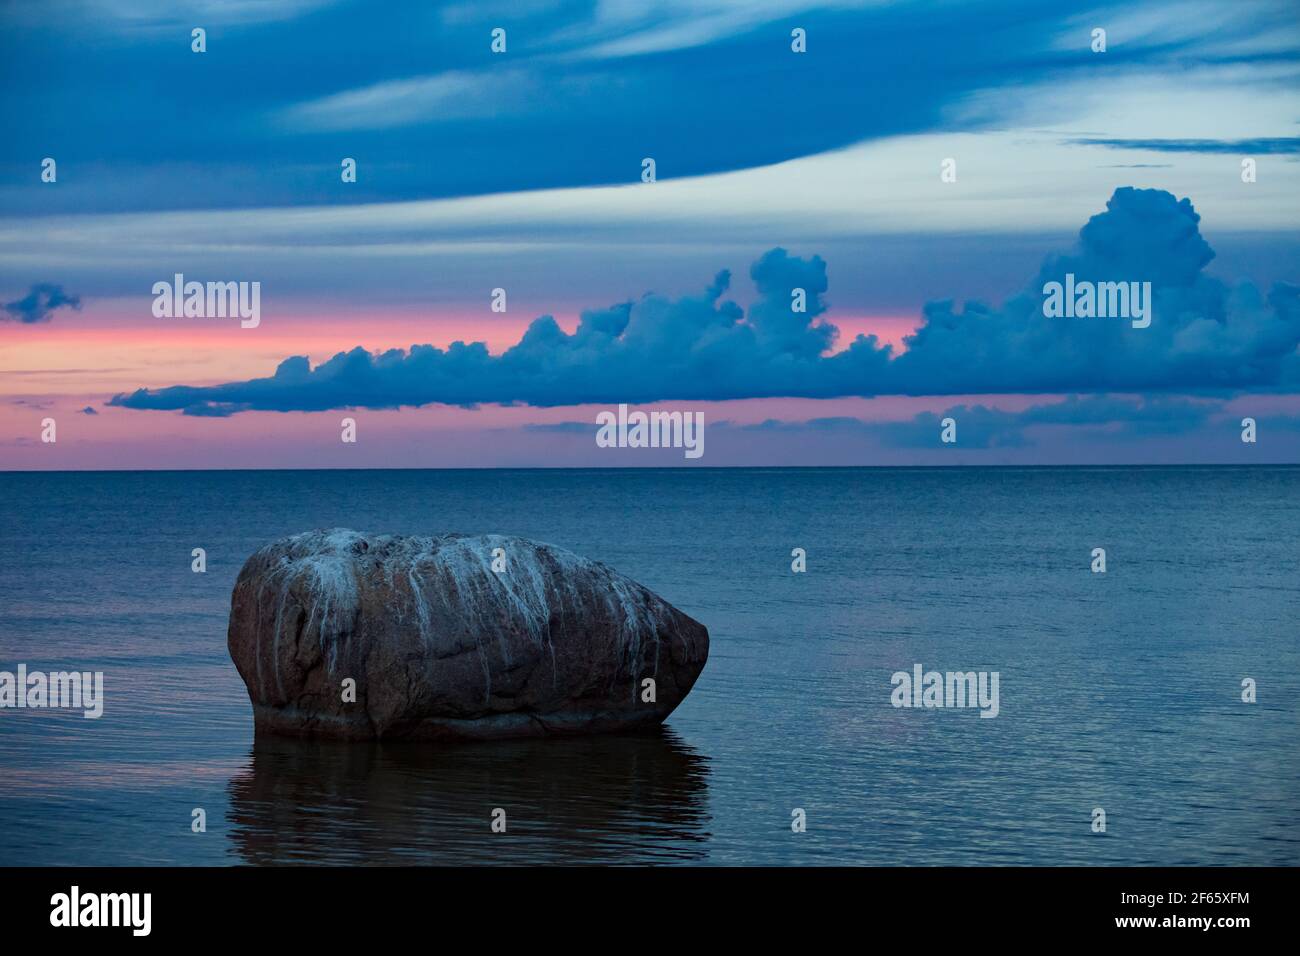 Estonia, Saaremaa island.Harilaid nature reserve. Sunset or sunrise on Baltic Sea. Big stone in water. Stock Photo